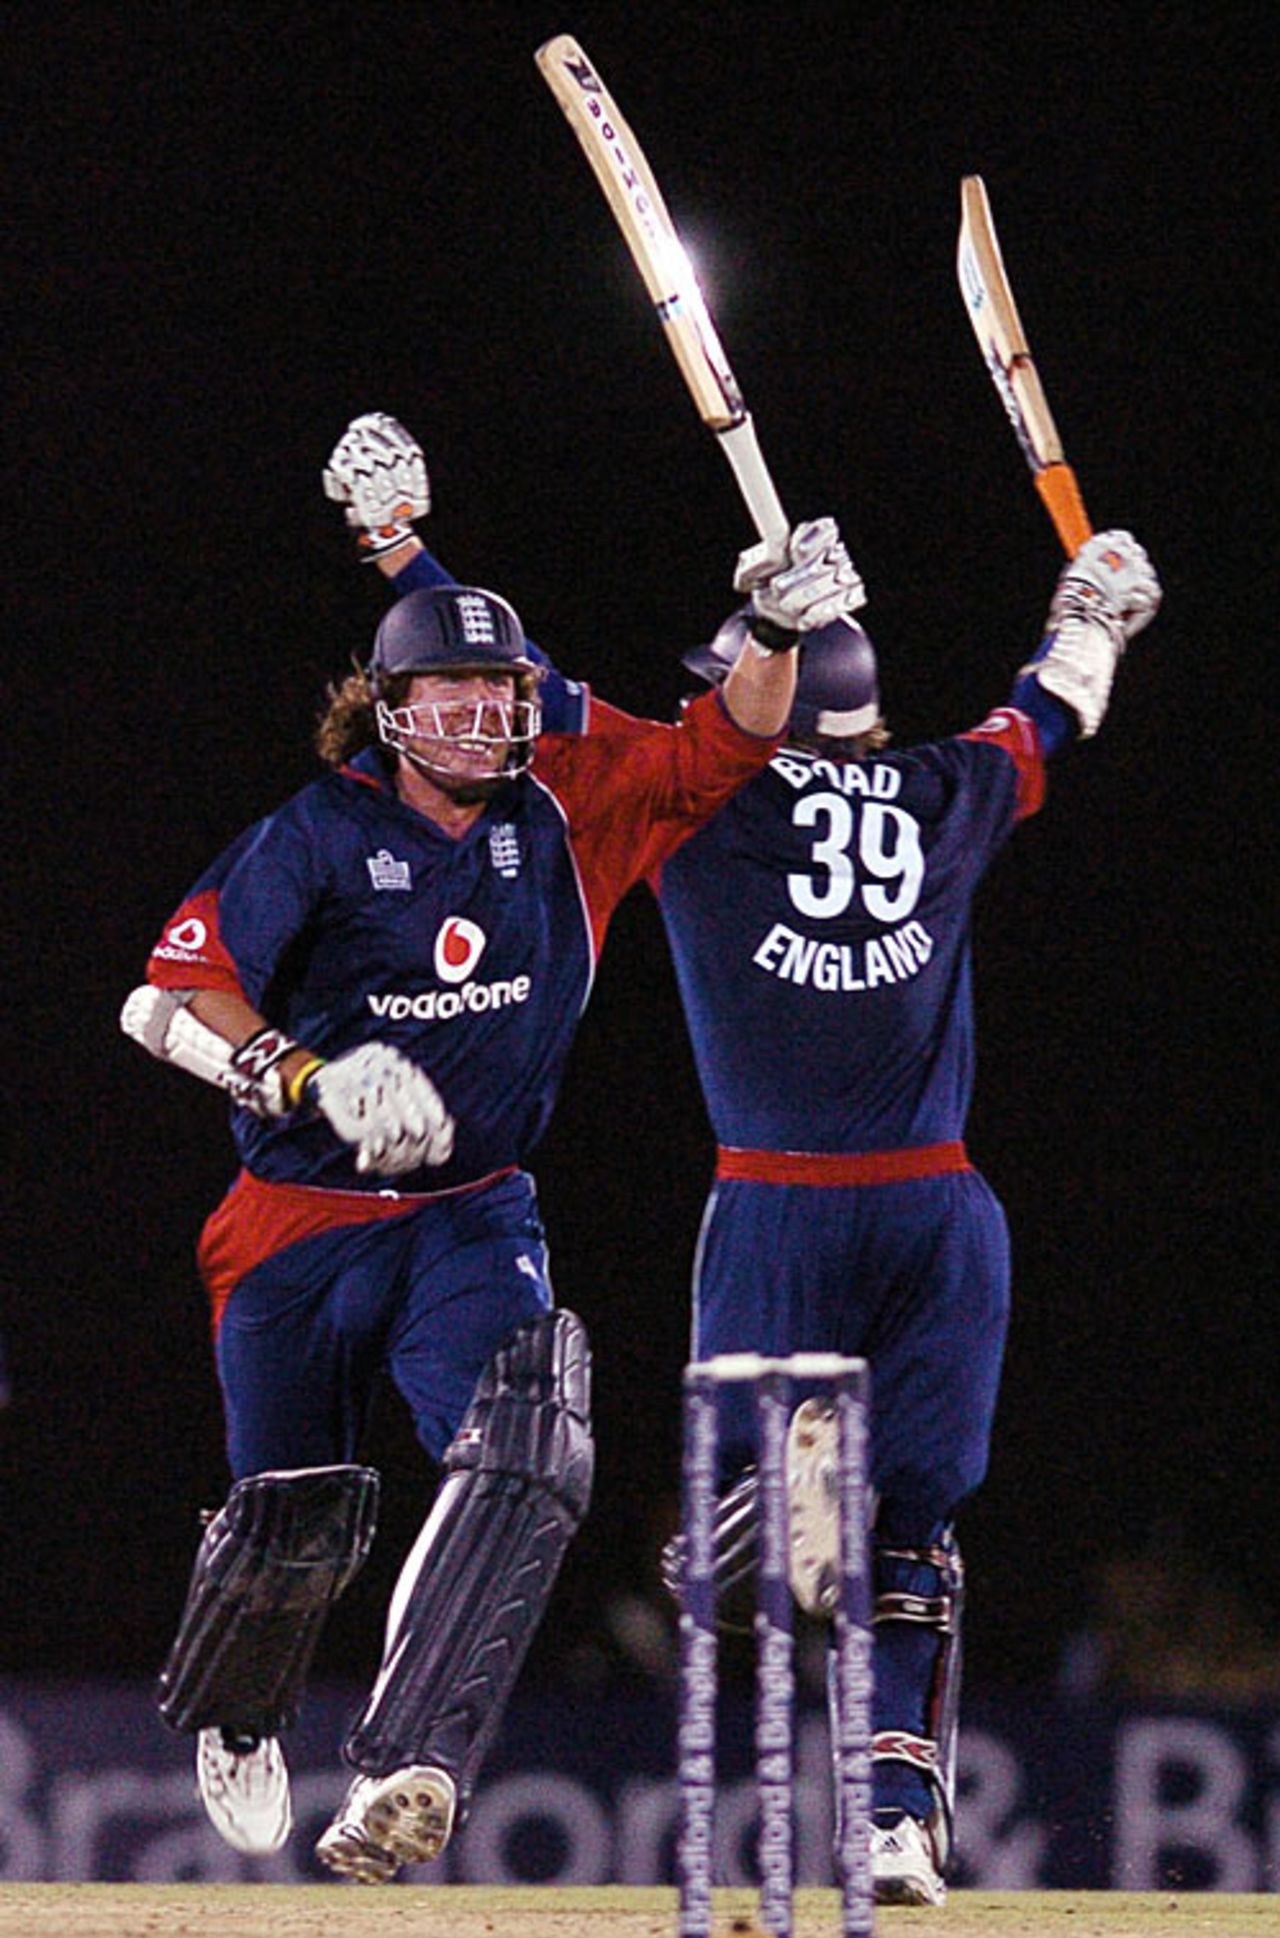 Arms aloft, Ryan Sidebottom and Stuart Broad celebrate England's two-wicket win over Sri Lanka, Sri Lanka v England, 3rd ODI, Dambulla, October 7, 2007